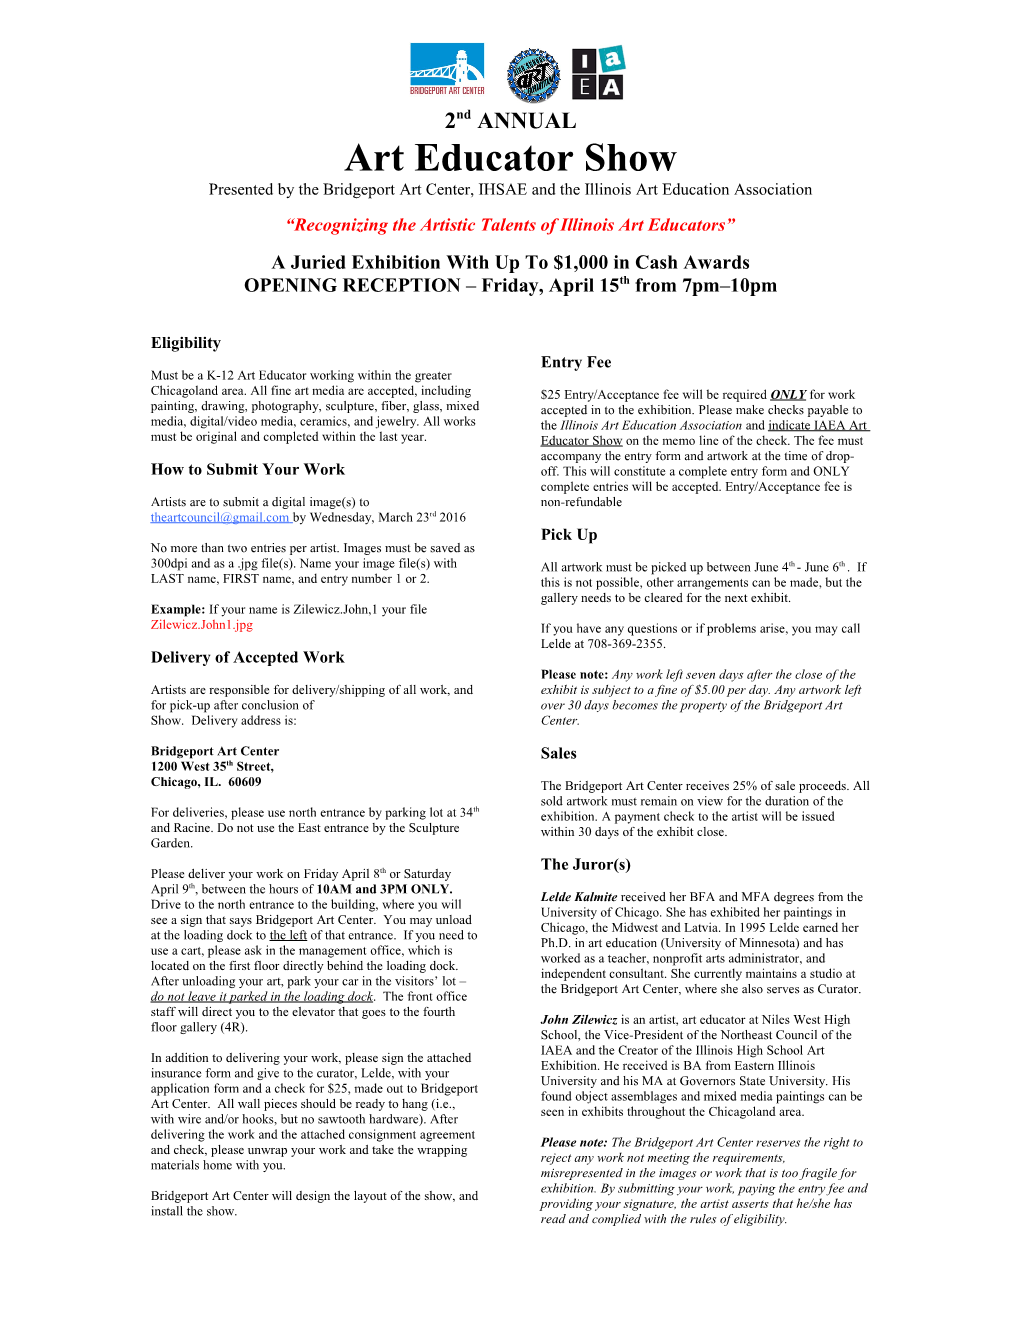 Recognizing the Artistic Talents of Illinois Art Educators